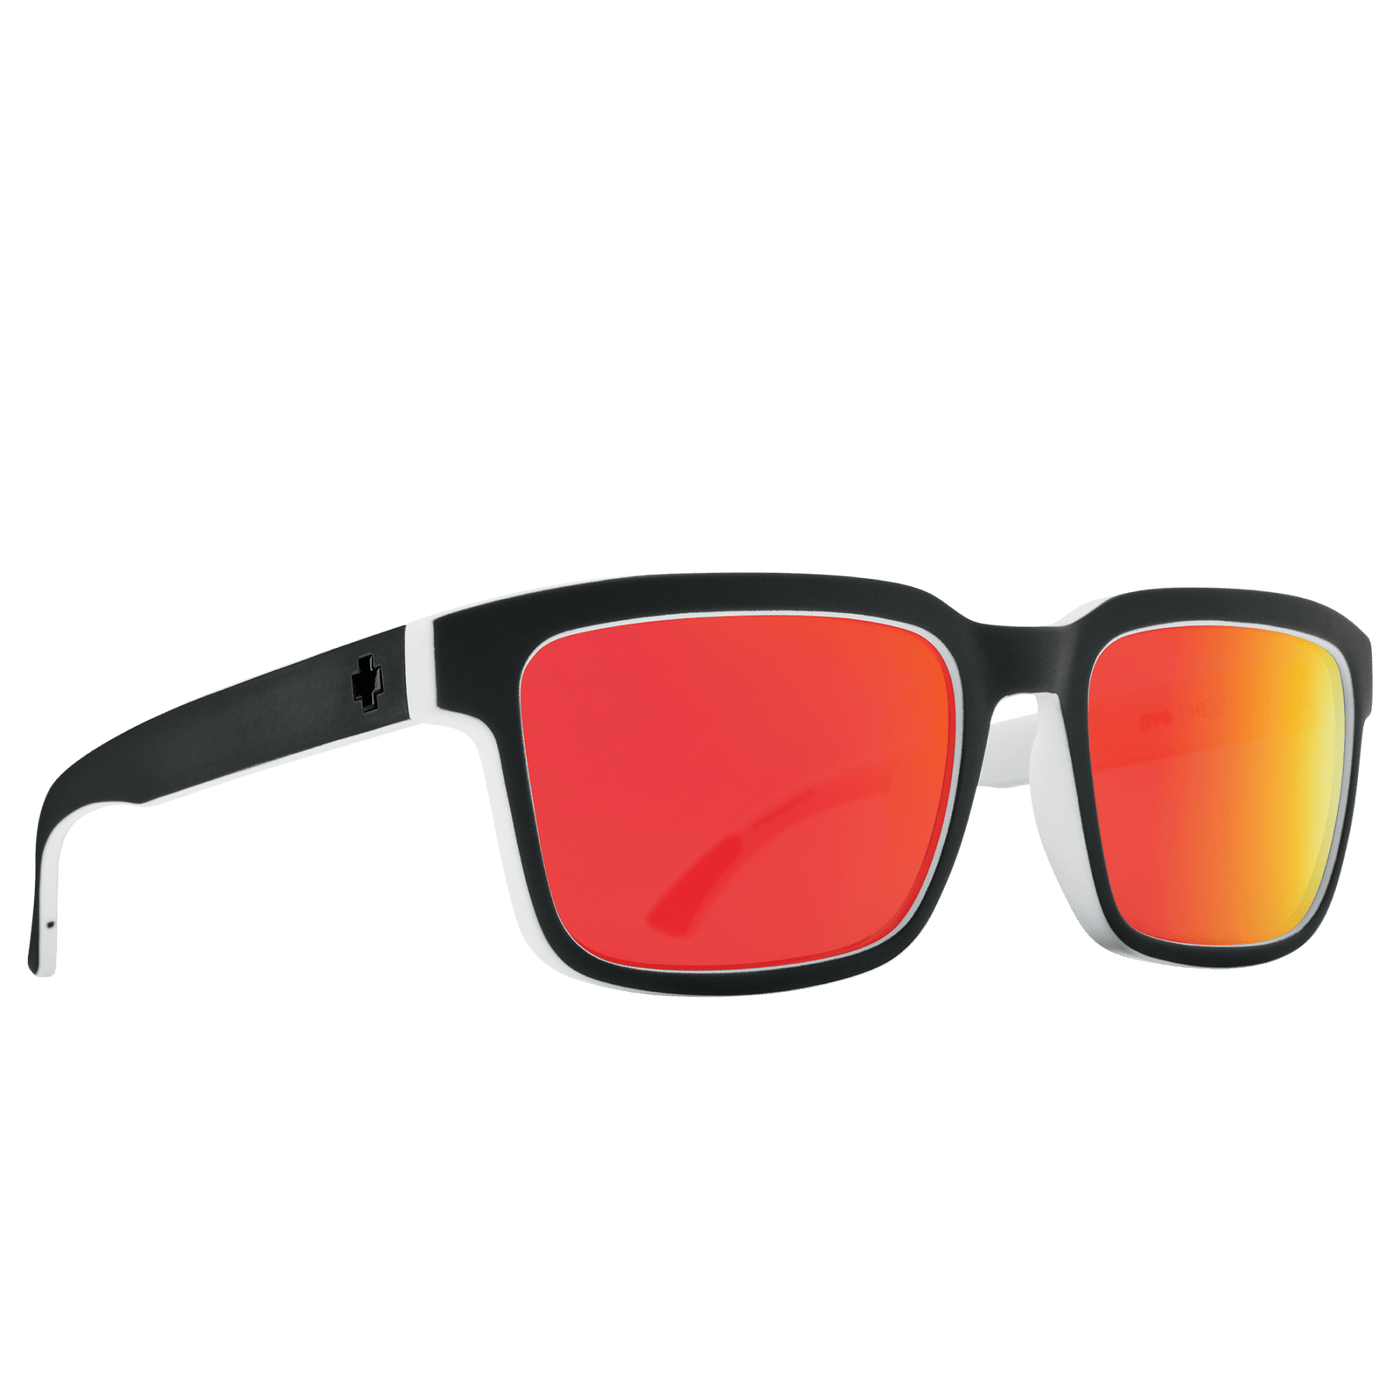 SPY HELM 2 Polarized Sunglasses, Happy Lens - Red